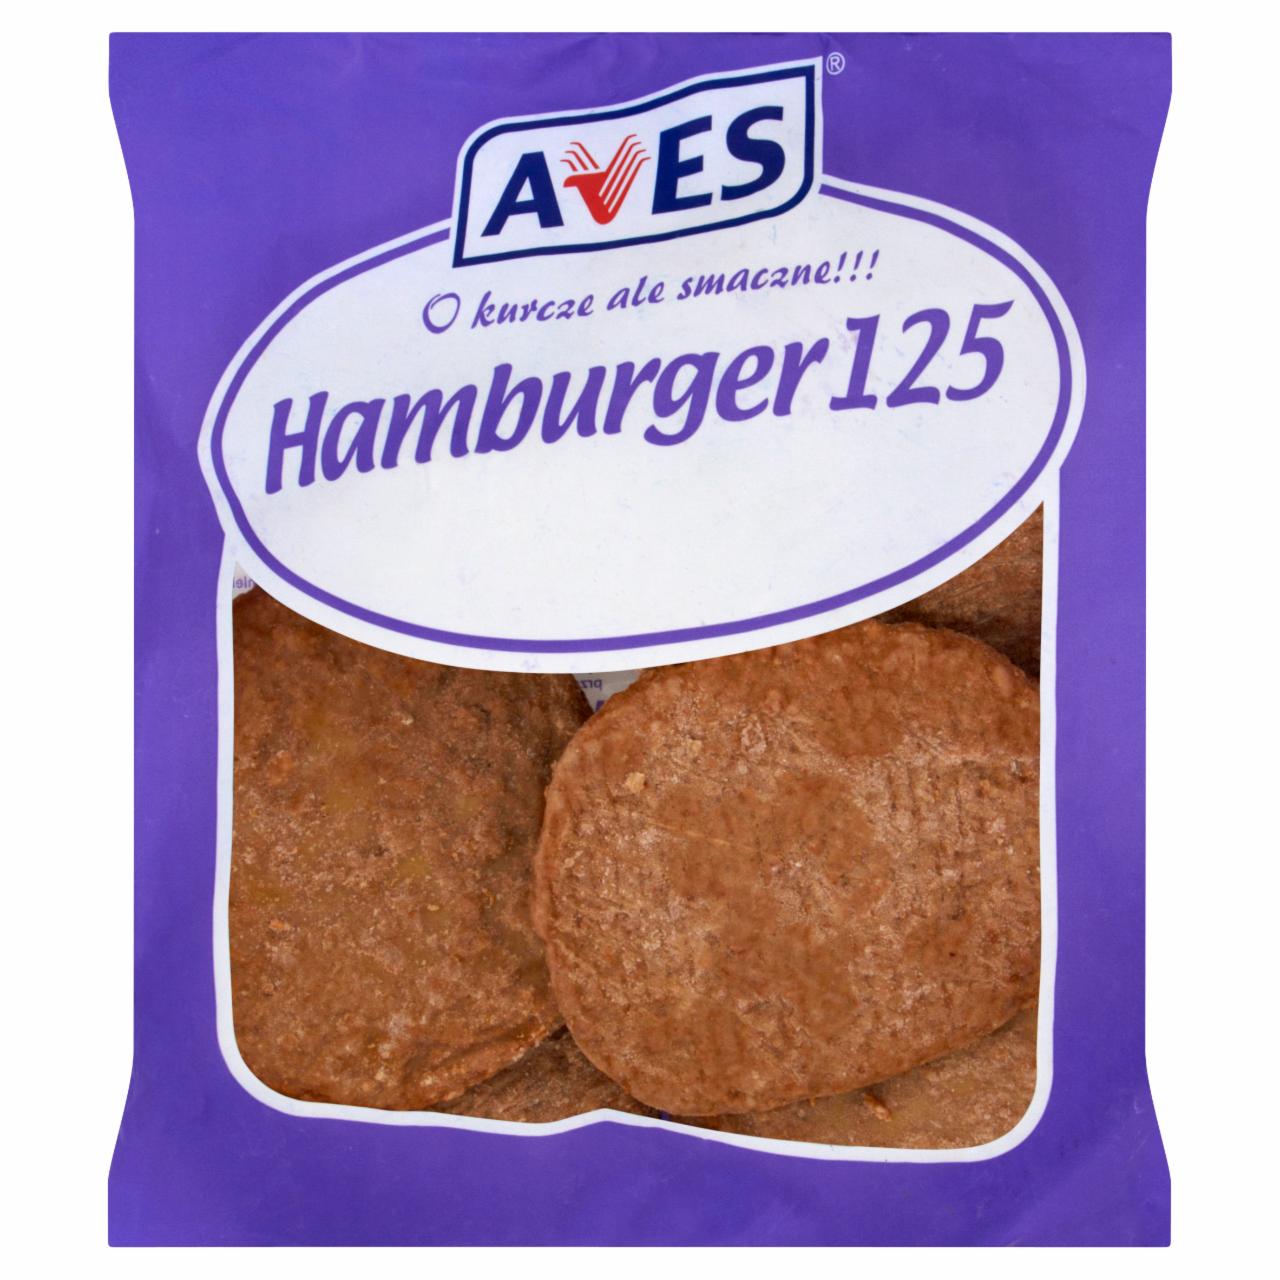 Zdjęcia - Aves Hamburger 125 1440 g